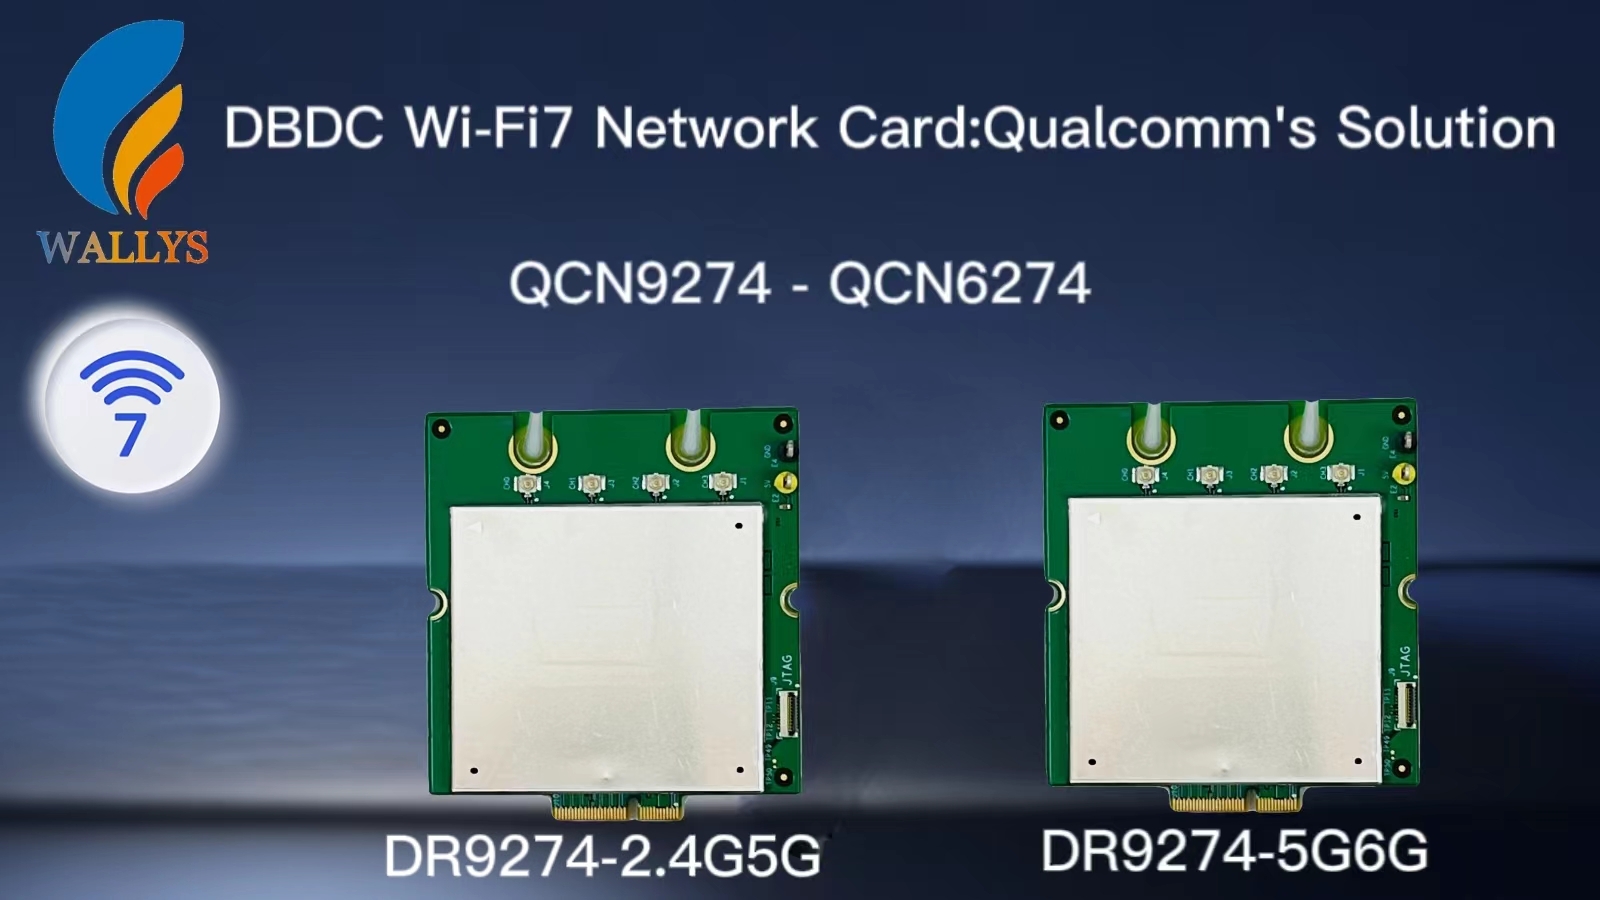 QCN9274|DBDC WiFi 7 Network Card: Qualcomm's Innovative Solution